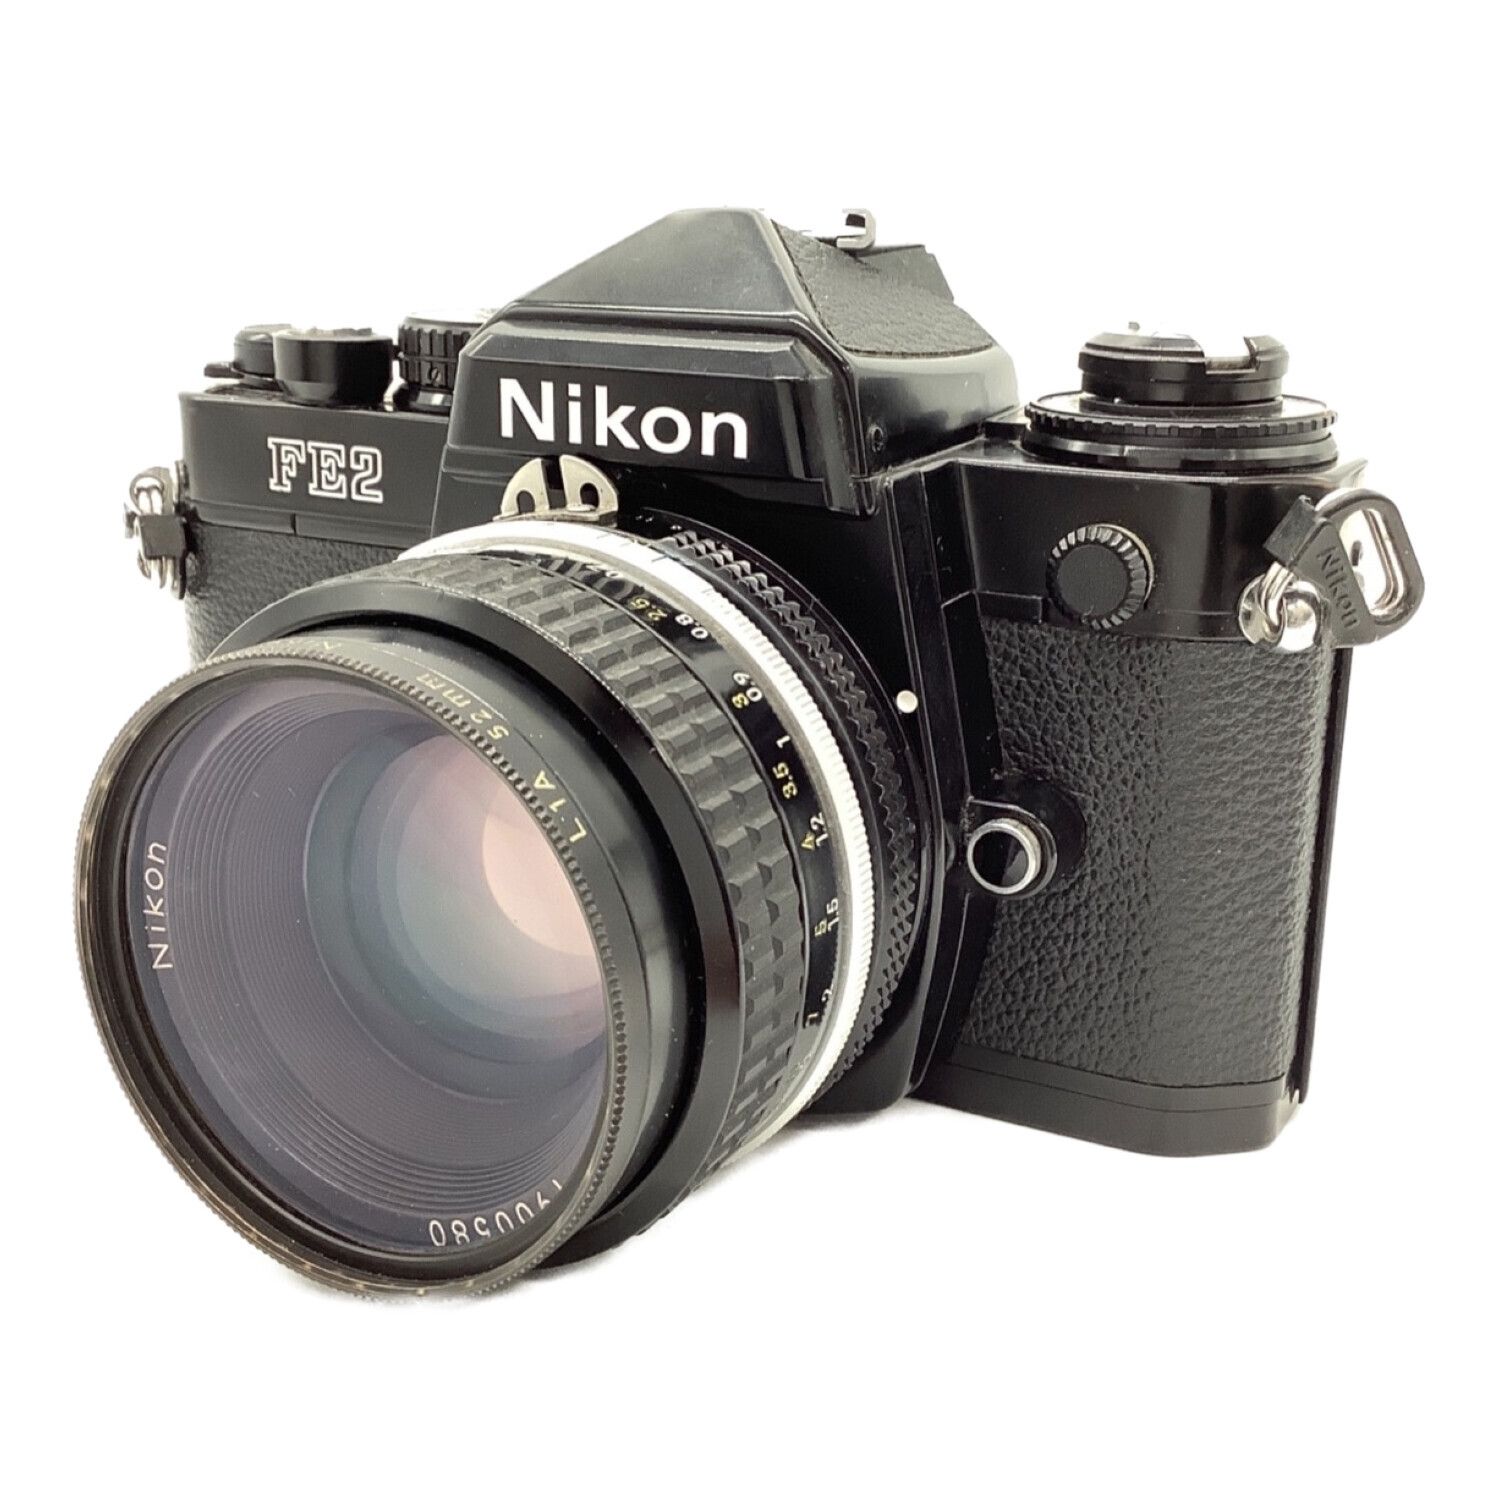 Nikon ニコン レトロフィルムカメラ FE2 レンズ:NIKKOR 1:1.8